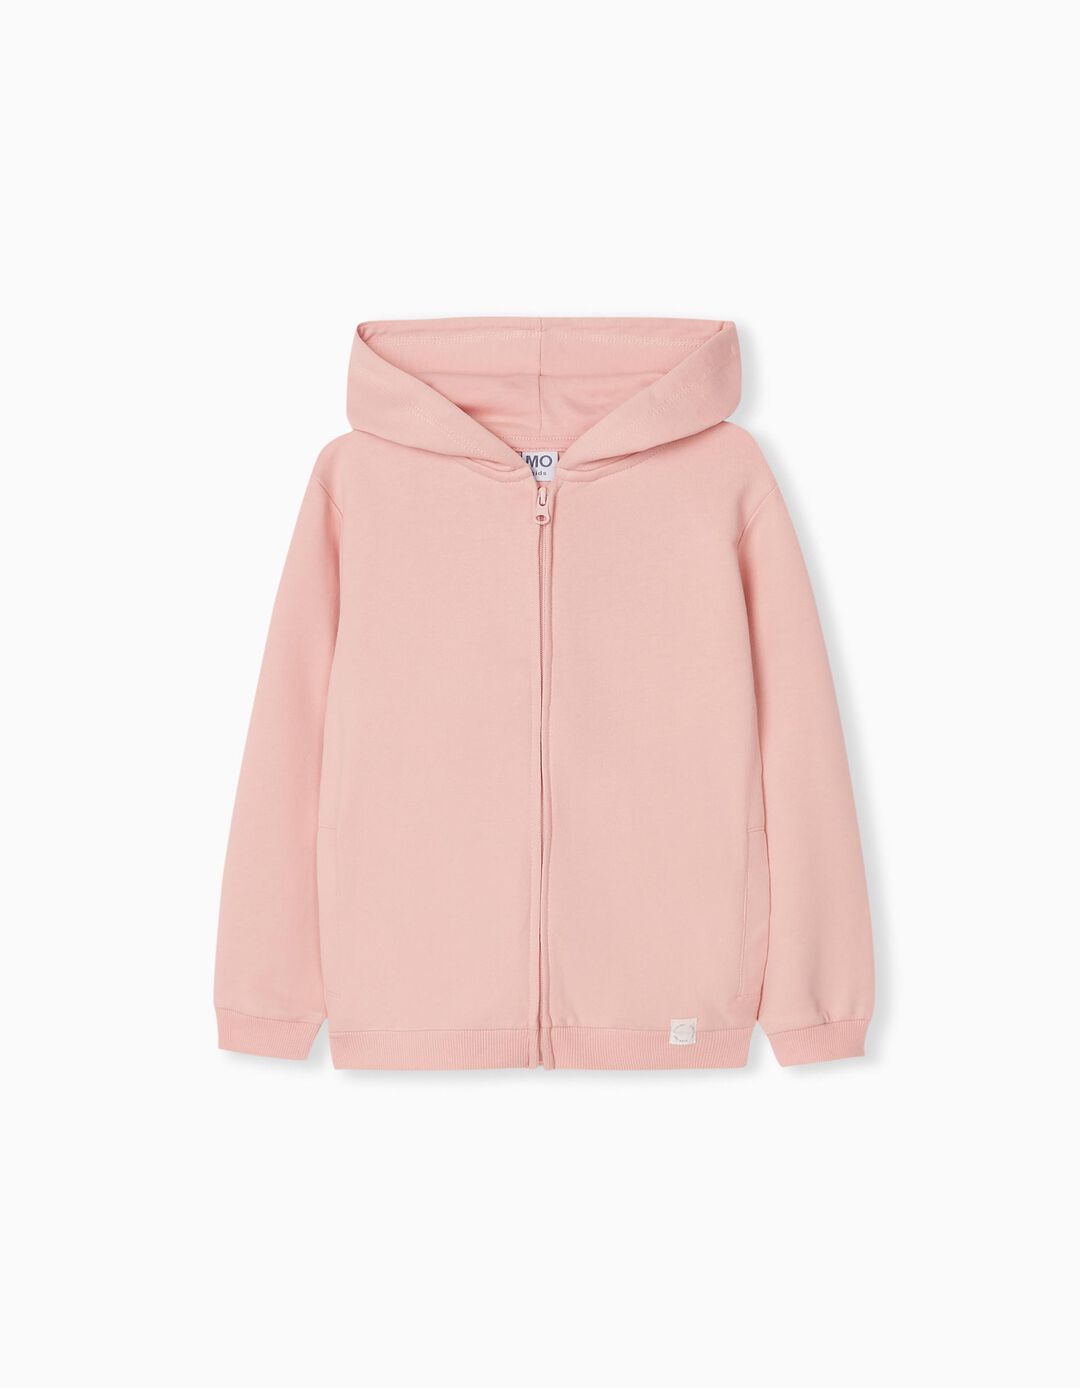 Hooded Fleece Jacket, Girls, Light Pink